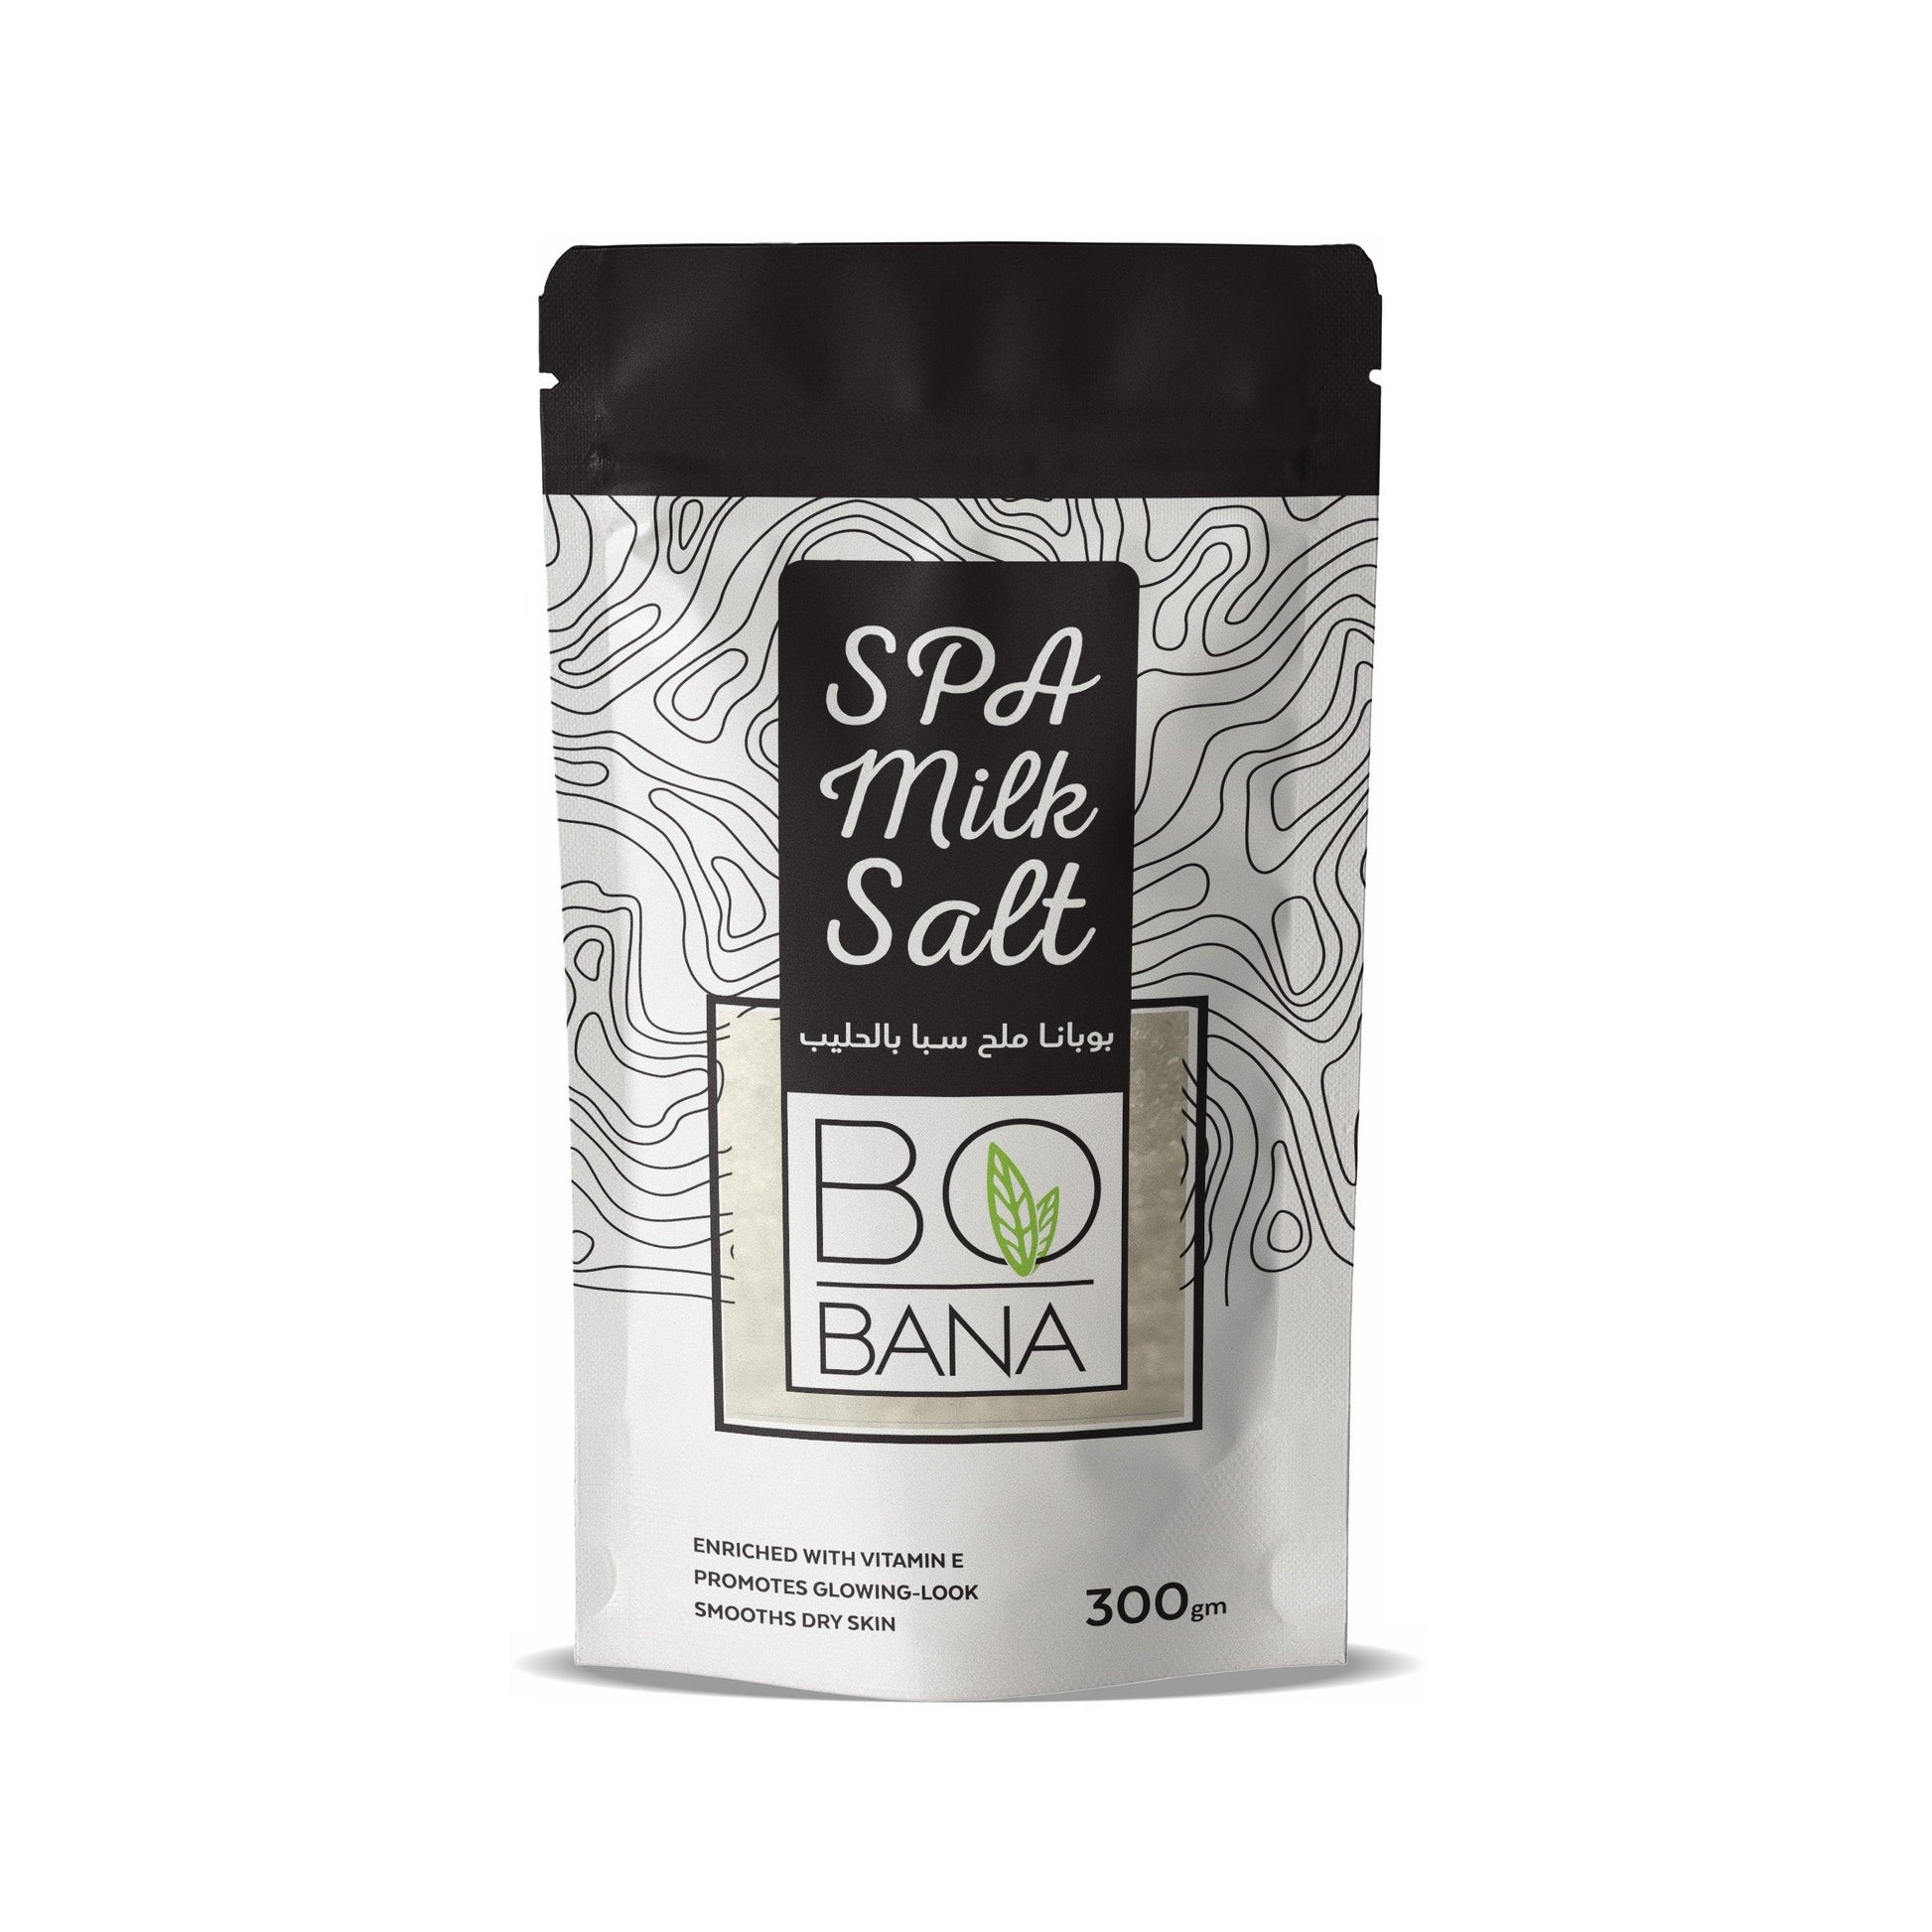 Bobana Milk Spa Salt, 300gm - Beauty Bounty